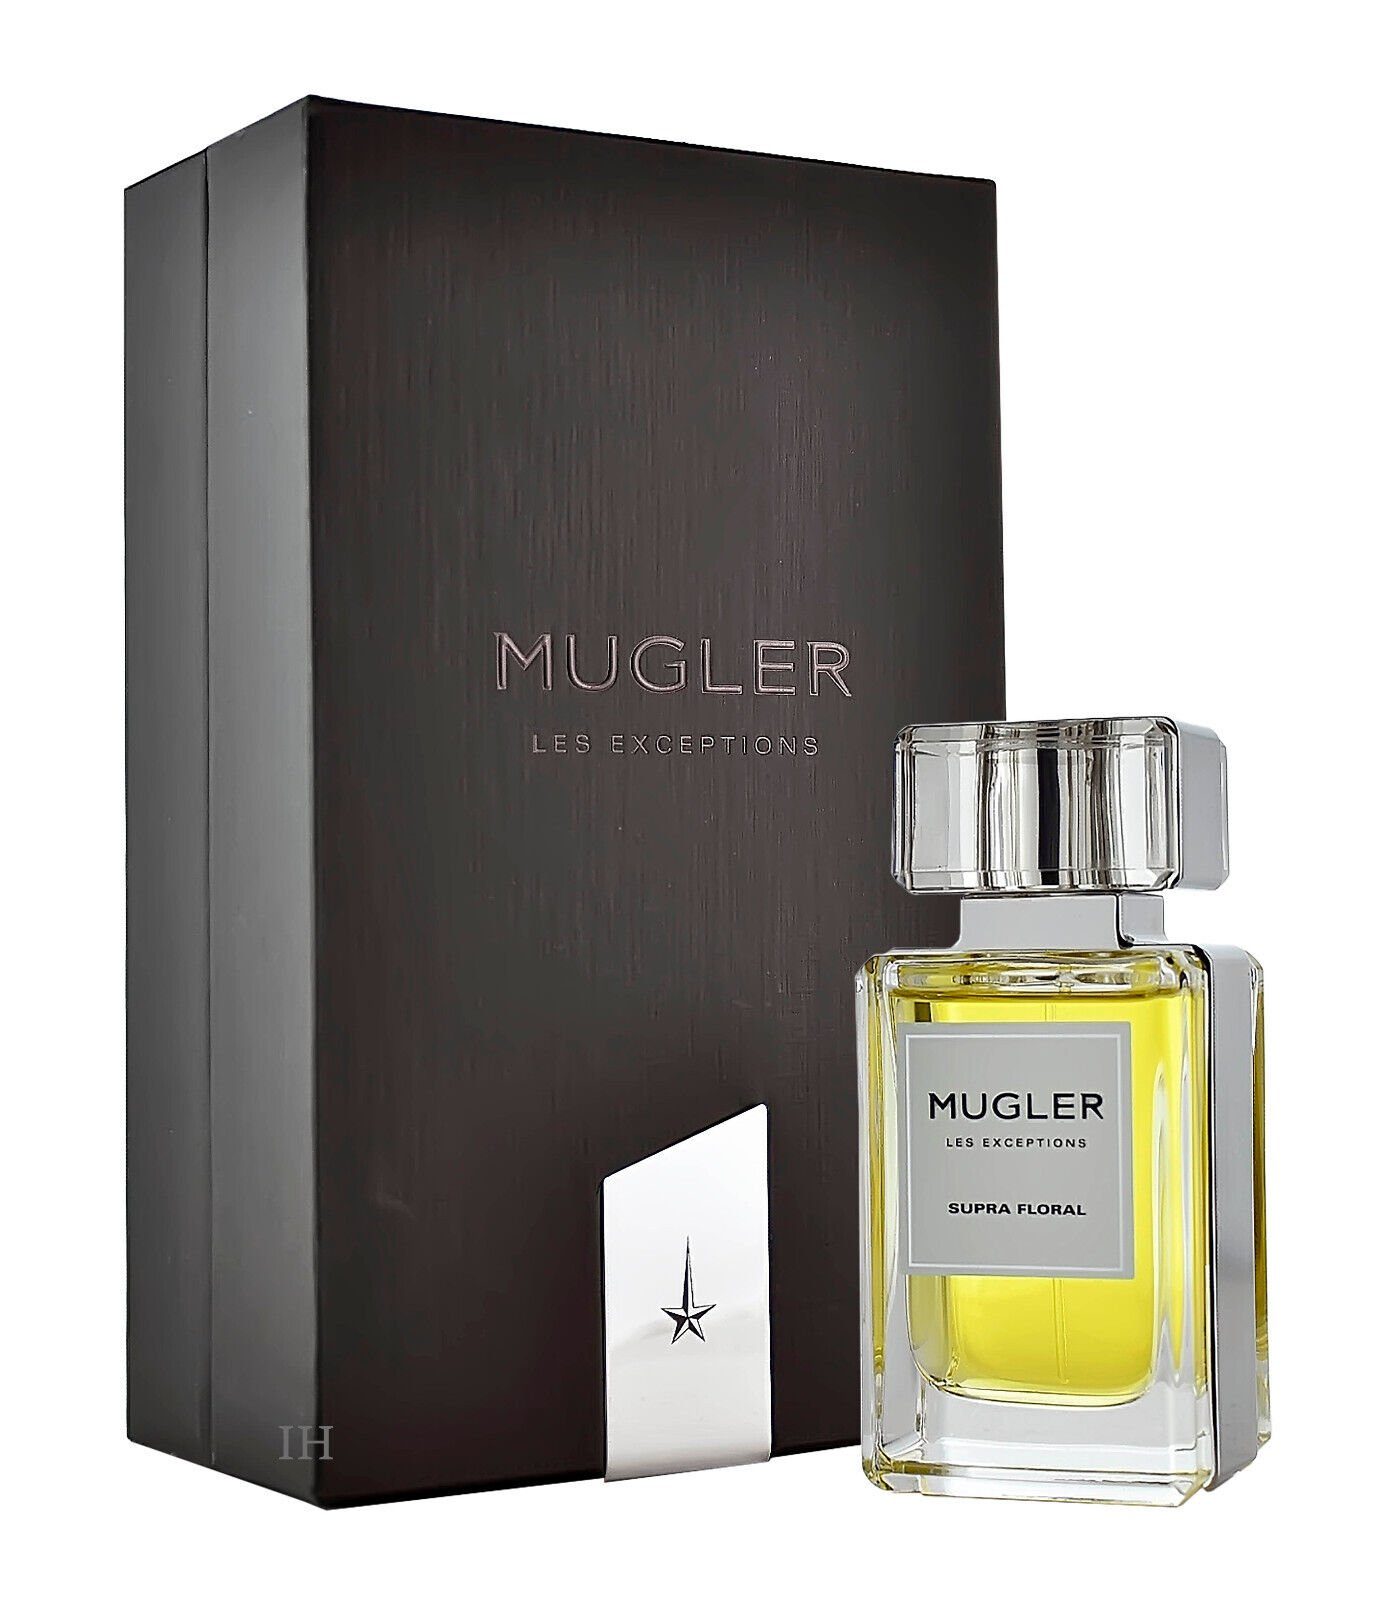 Supra 80ml EDP Mugler Exceptions Mugler Parfum Floral Eau Les de